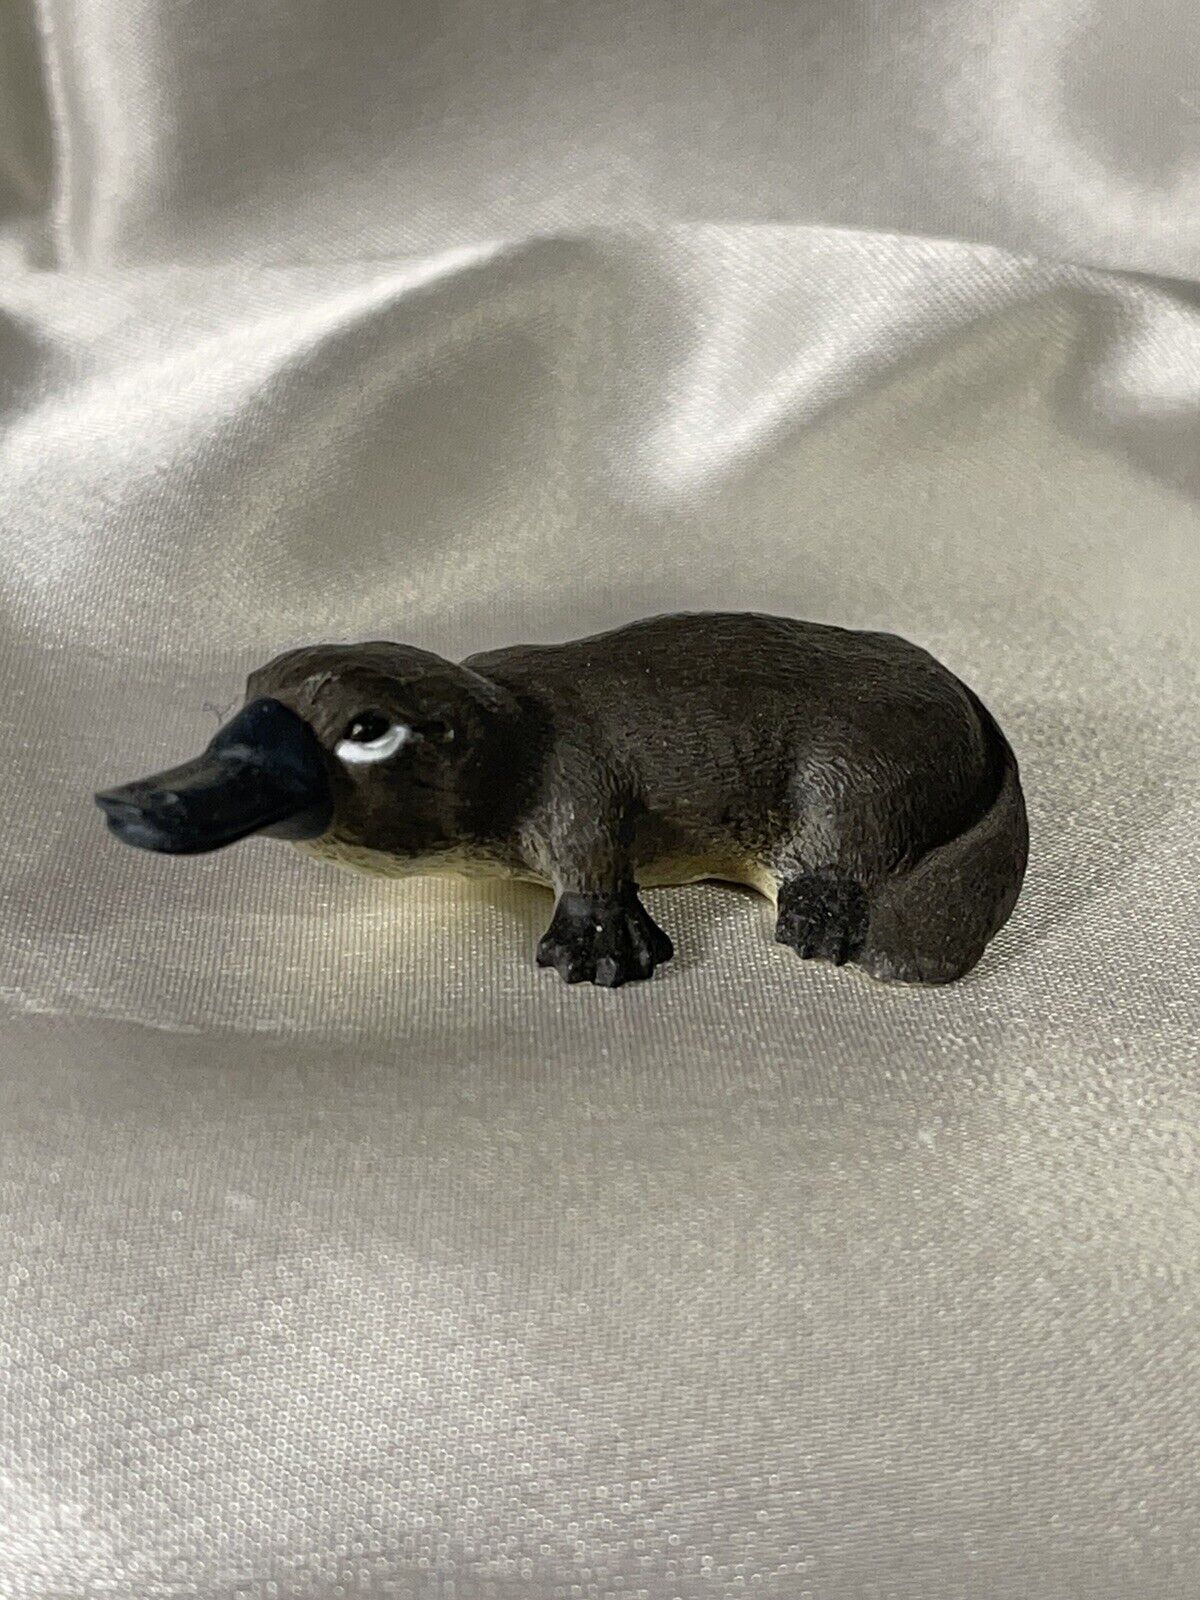 Yowie Playtypus Animal PVC Mini Figure Figurine Model Collectible